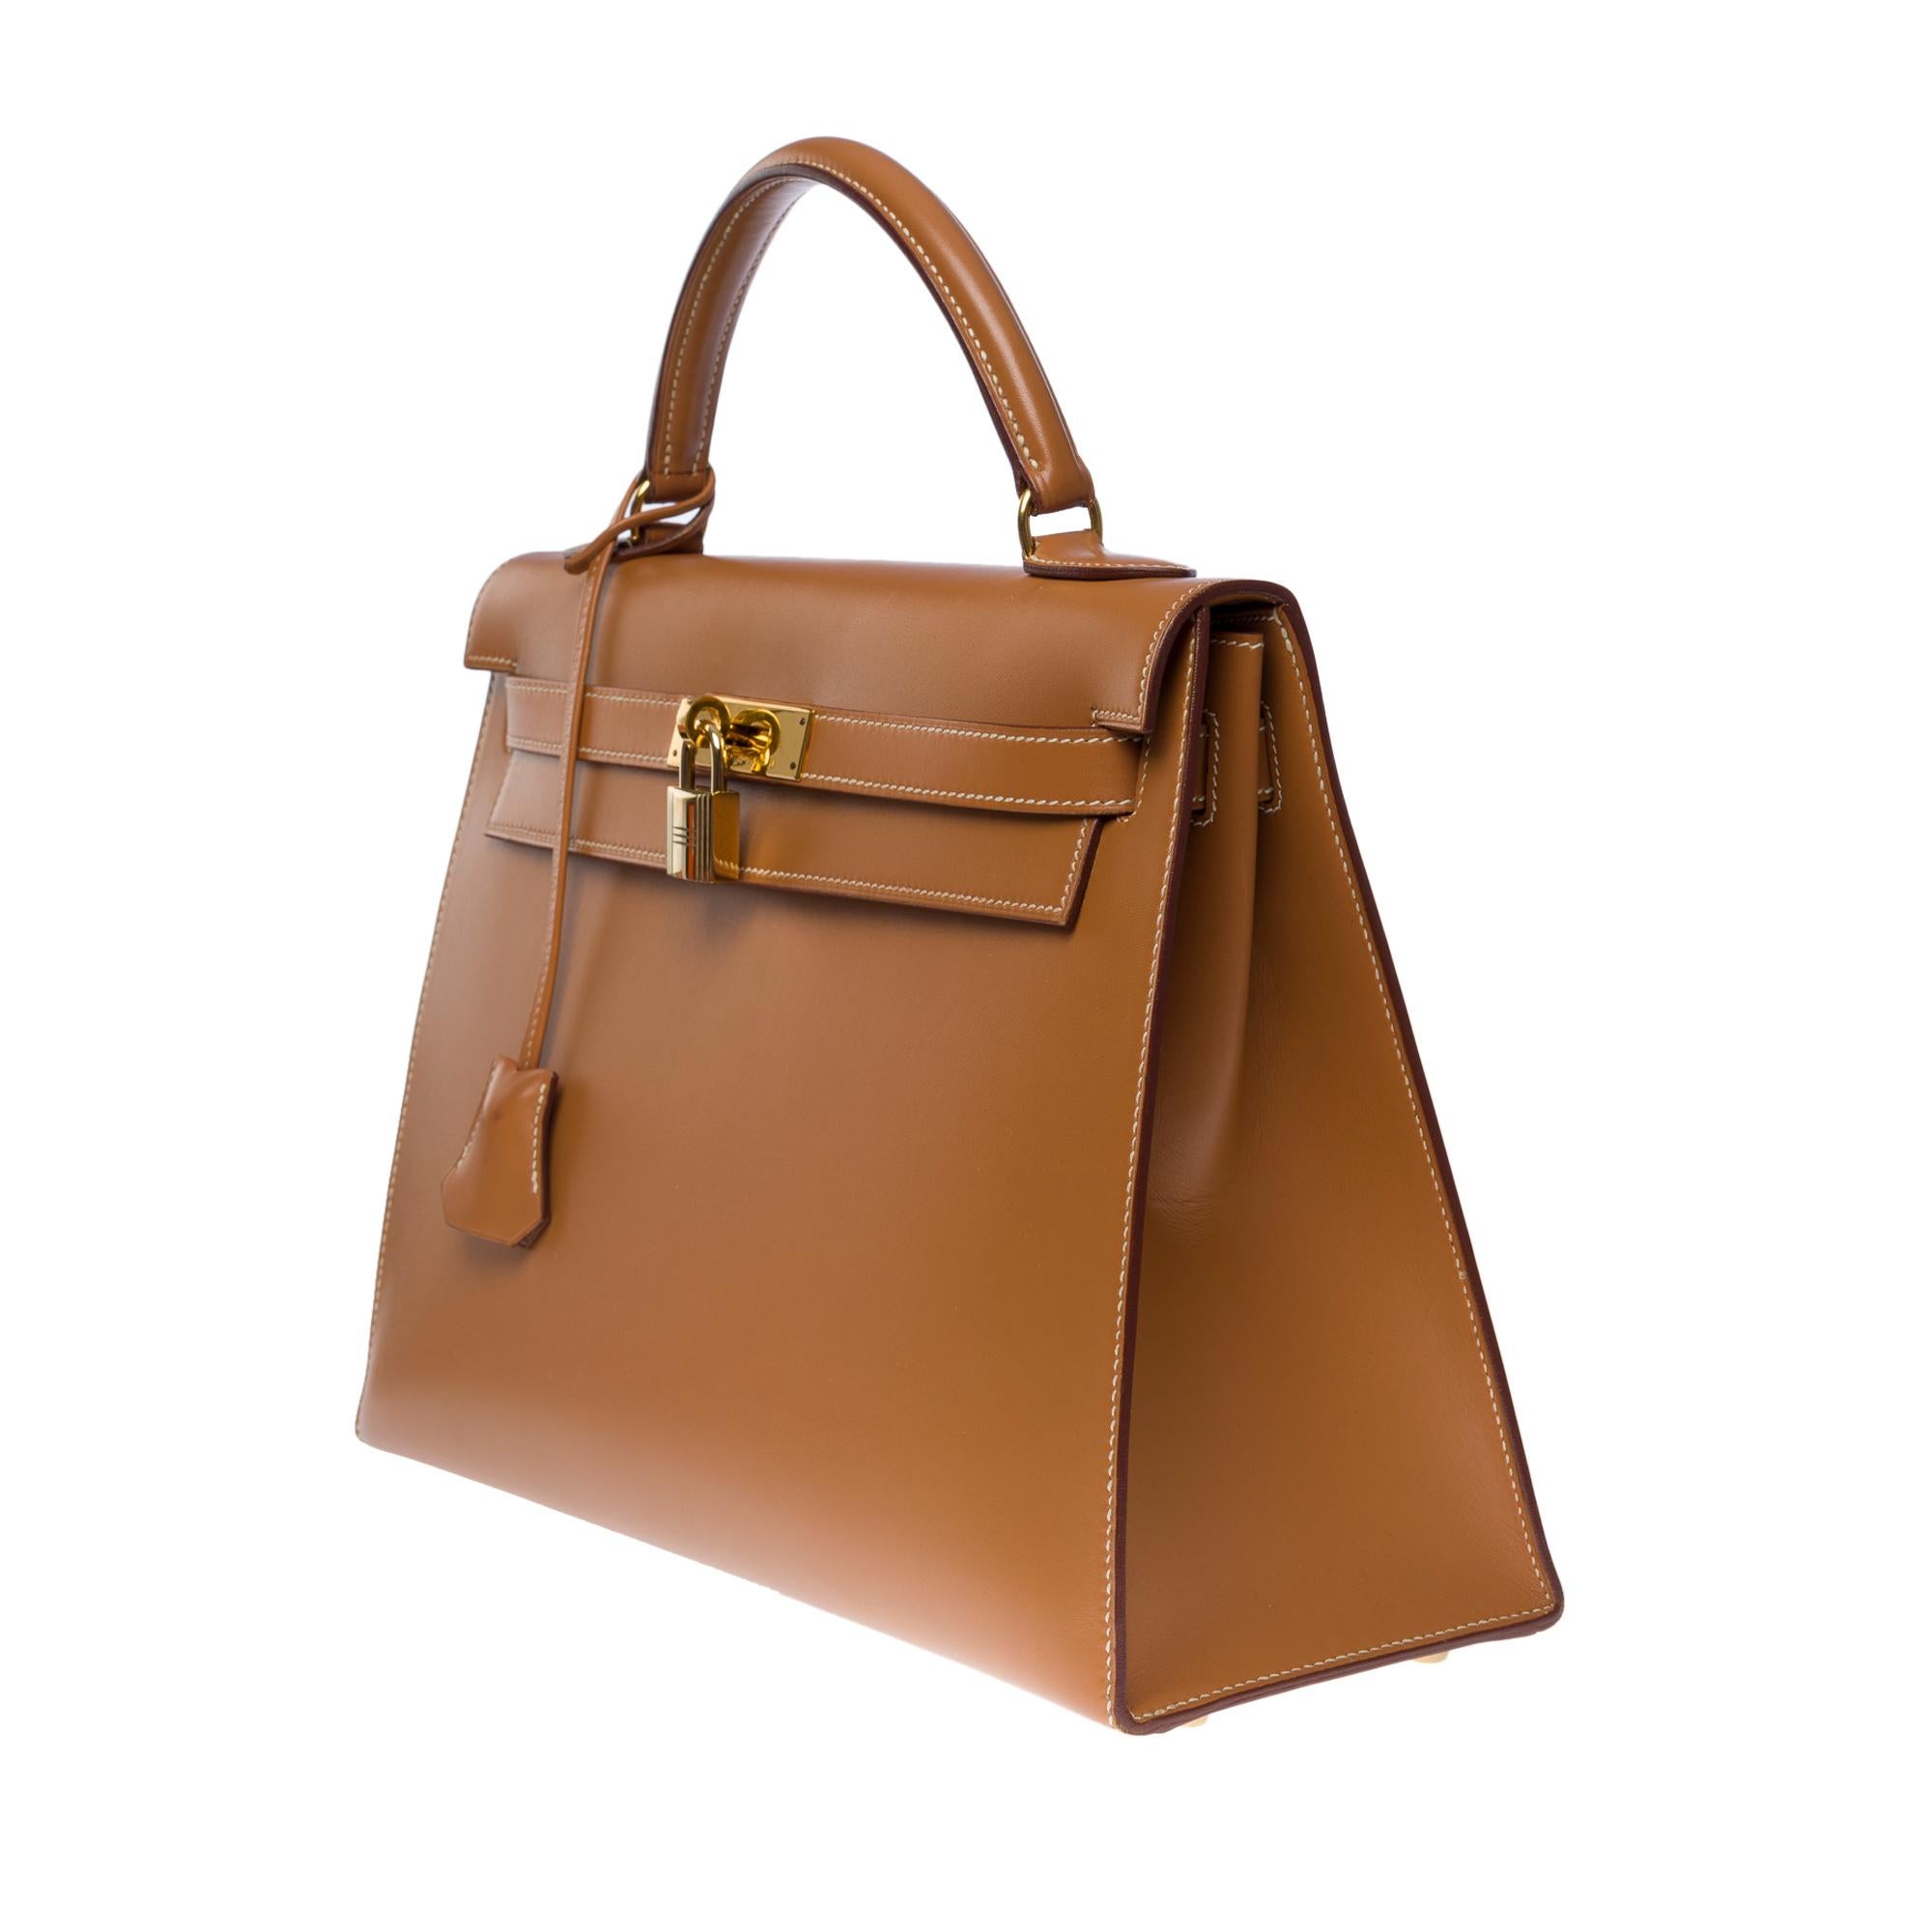 Women's Very Rare Hermès Kelly 32 sellier handbag strap in Gold Chamonix leather , GHW